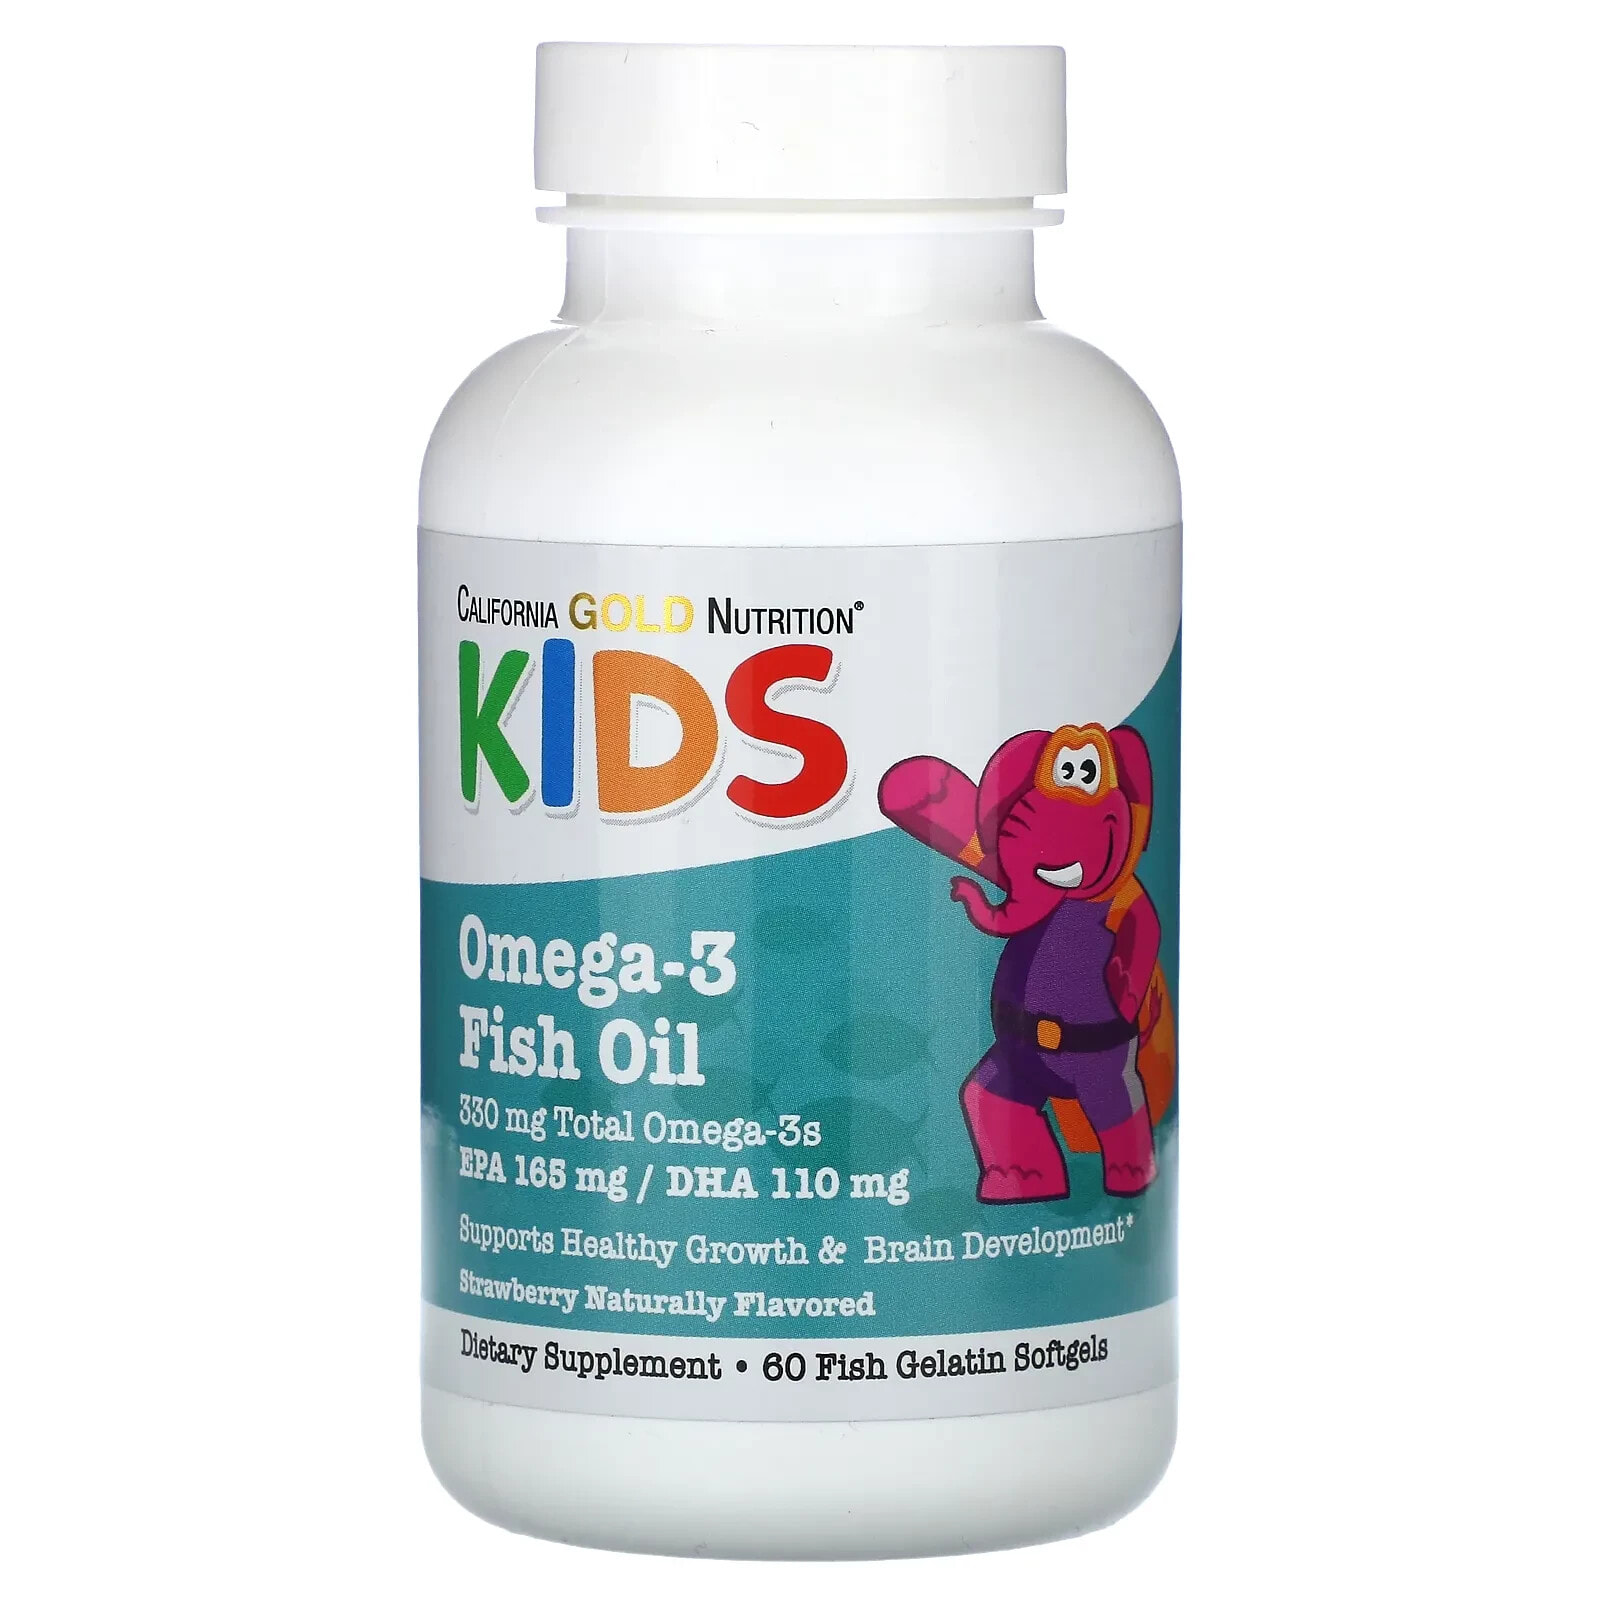 Kid’s Omega-3 Fish Oil, Natural Strawberry Flavor, 60 Fish Gelatin Softgels